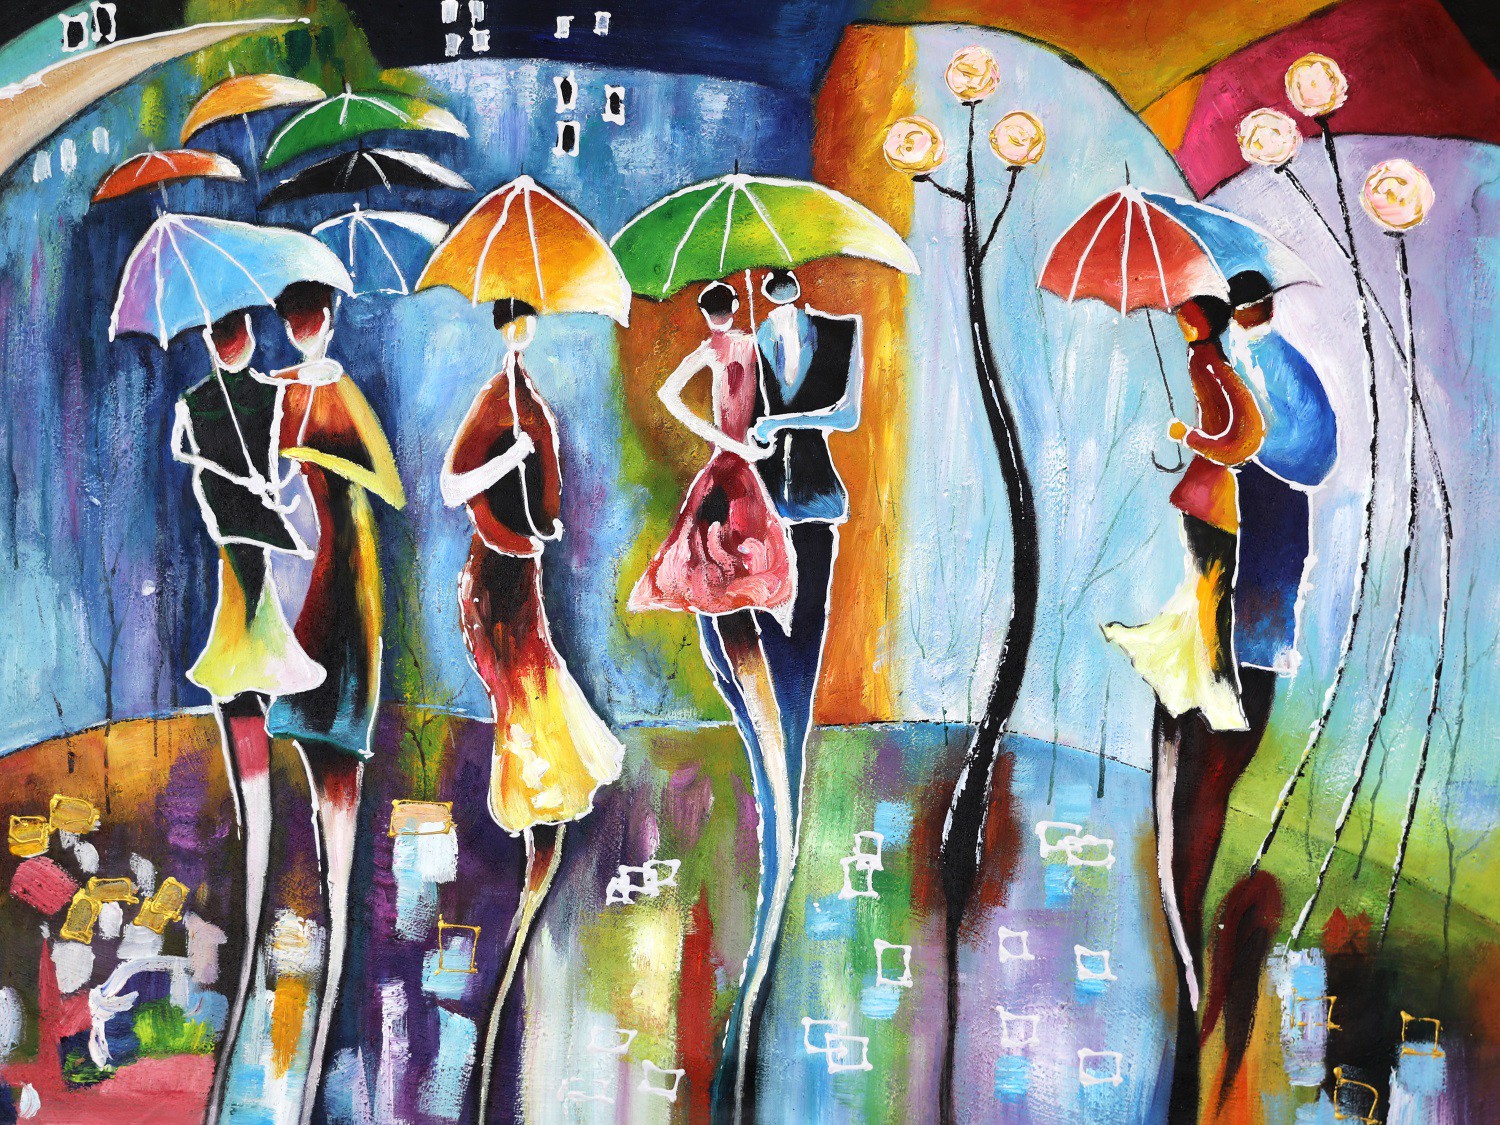 Olieverfschilderij dansende regen - kopen foto 2